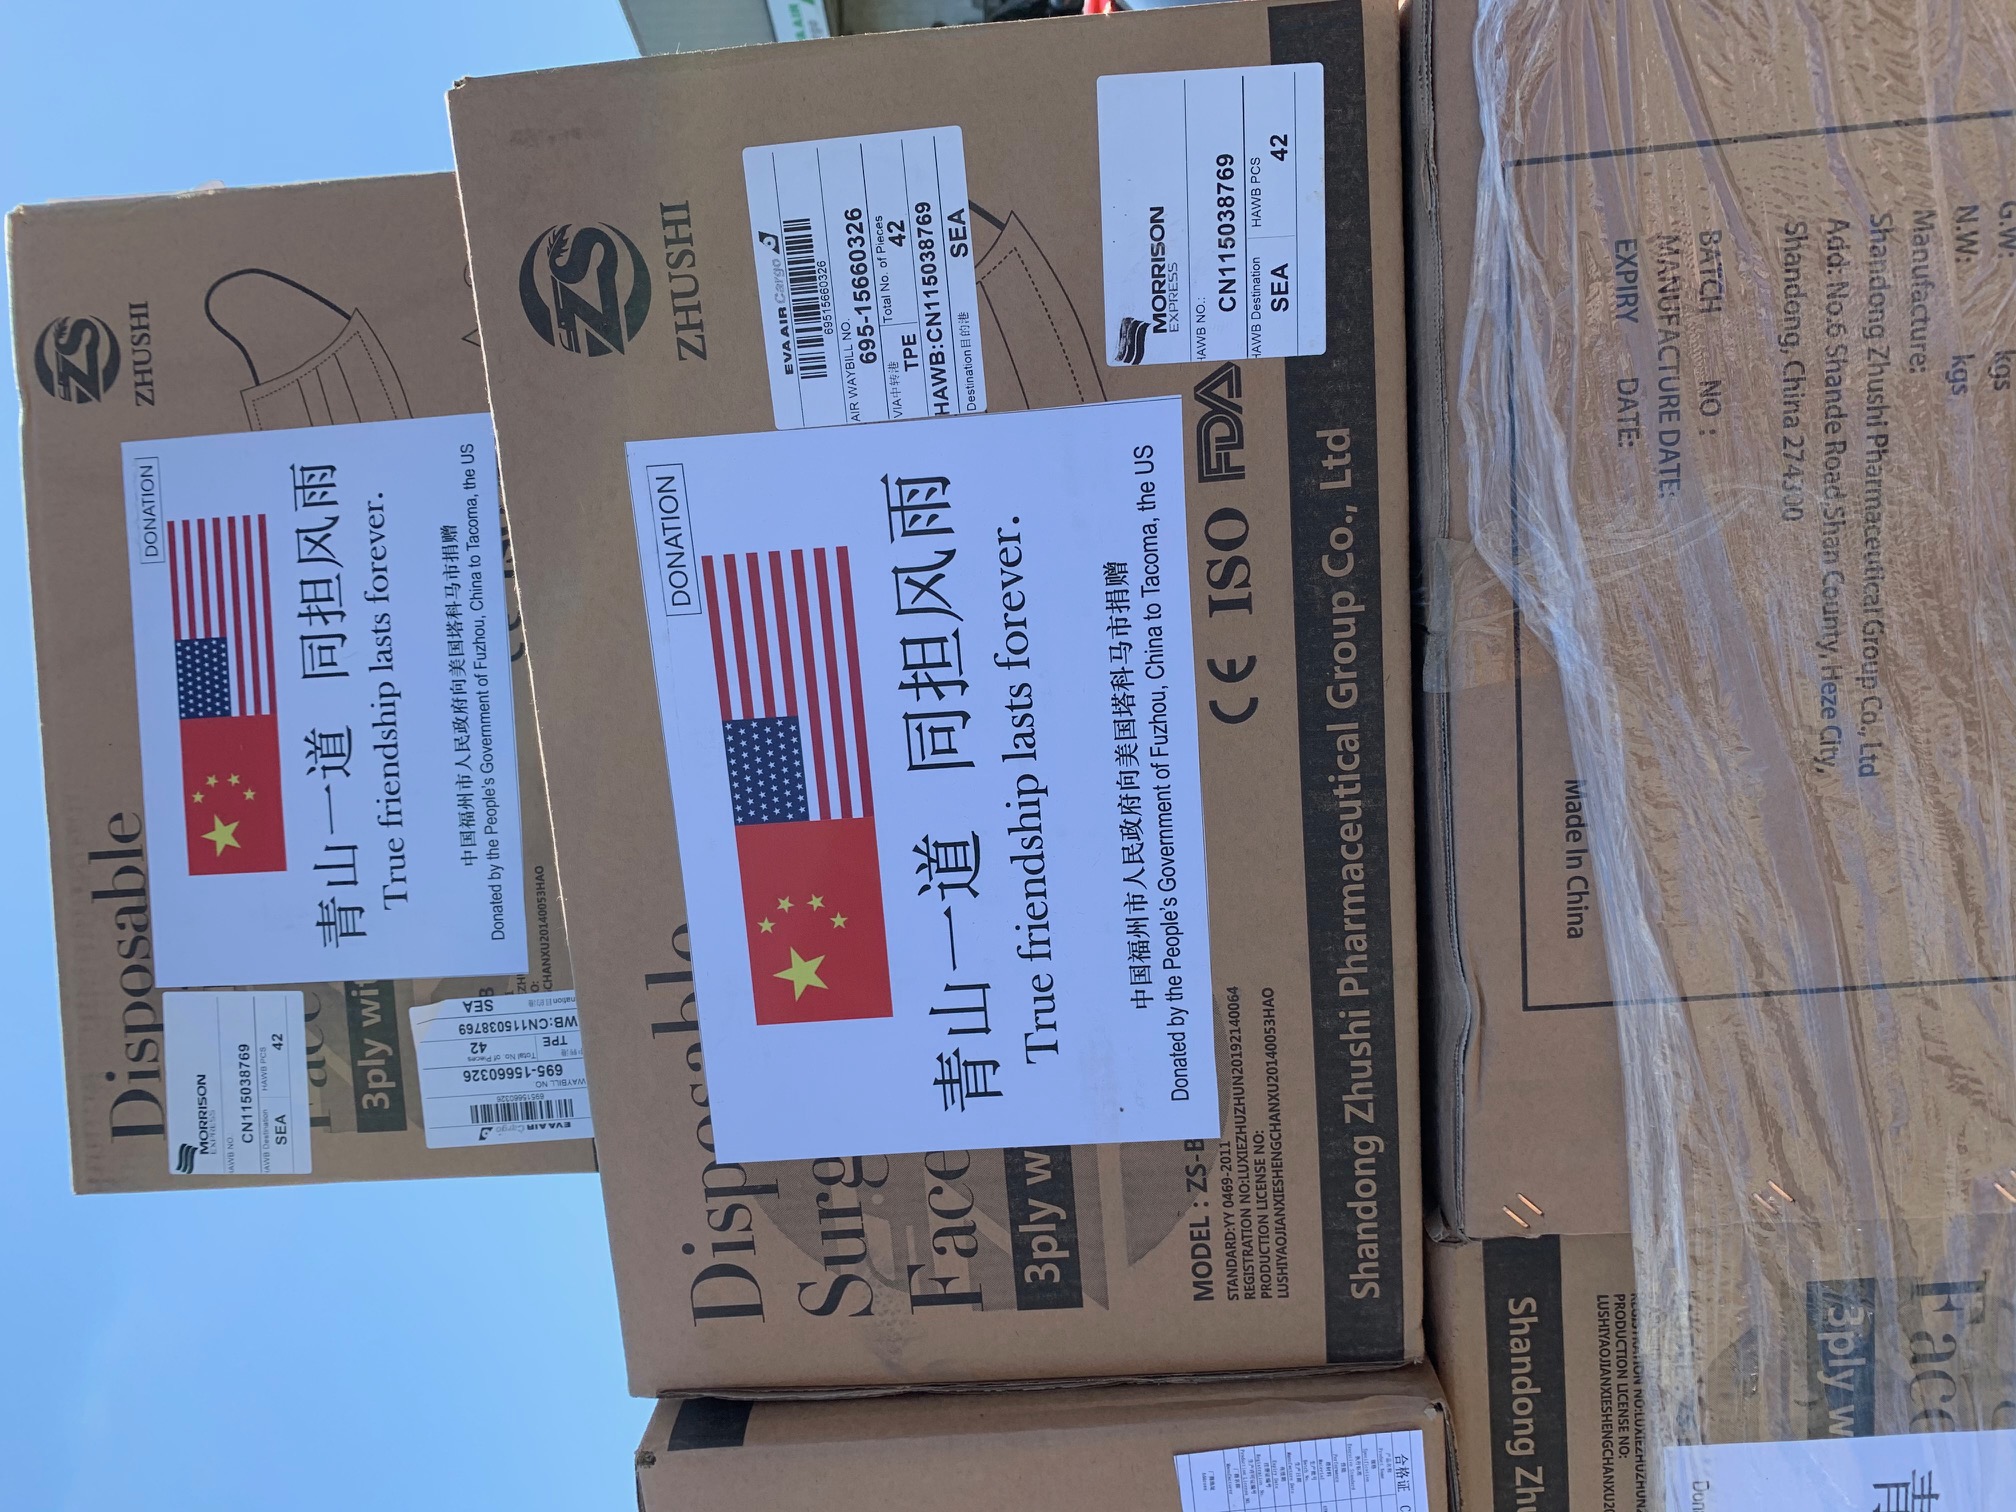 Fuzhou Donates Medical Supplies to Tacoma Image Courtesy City of Tacoma